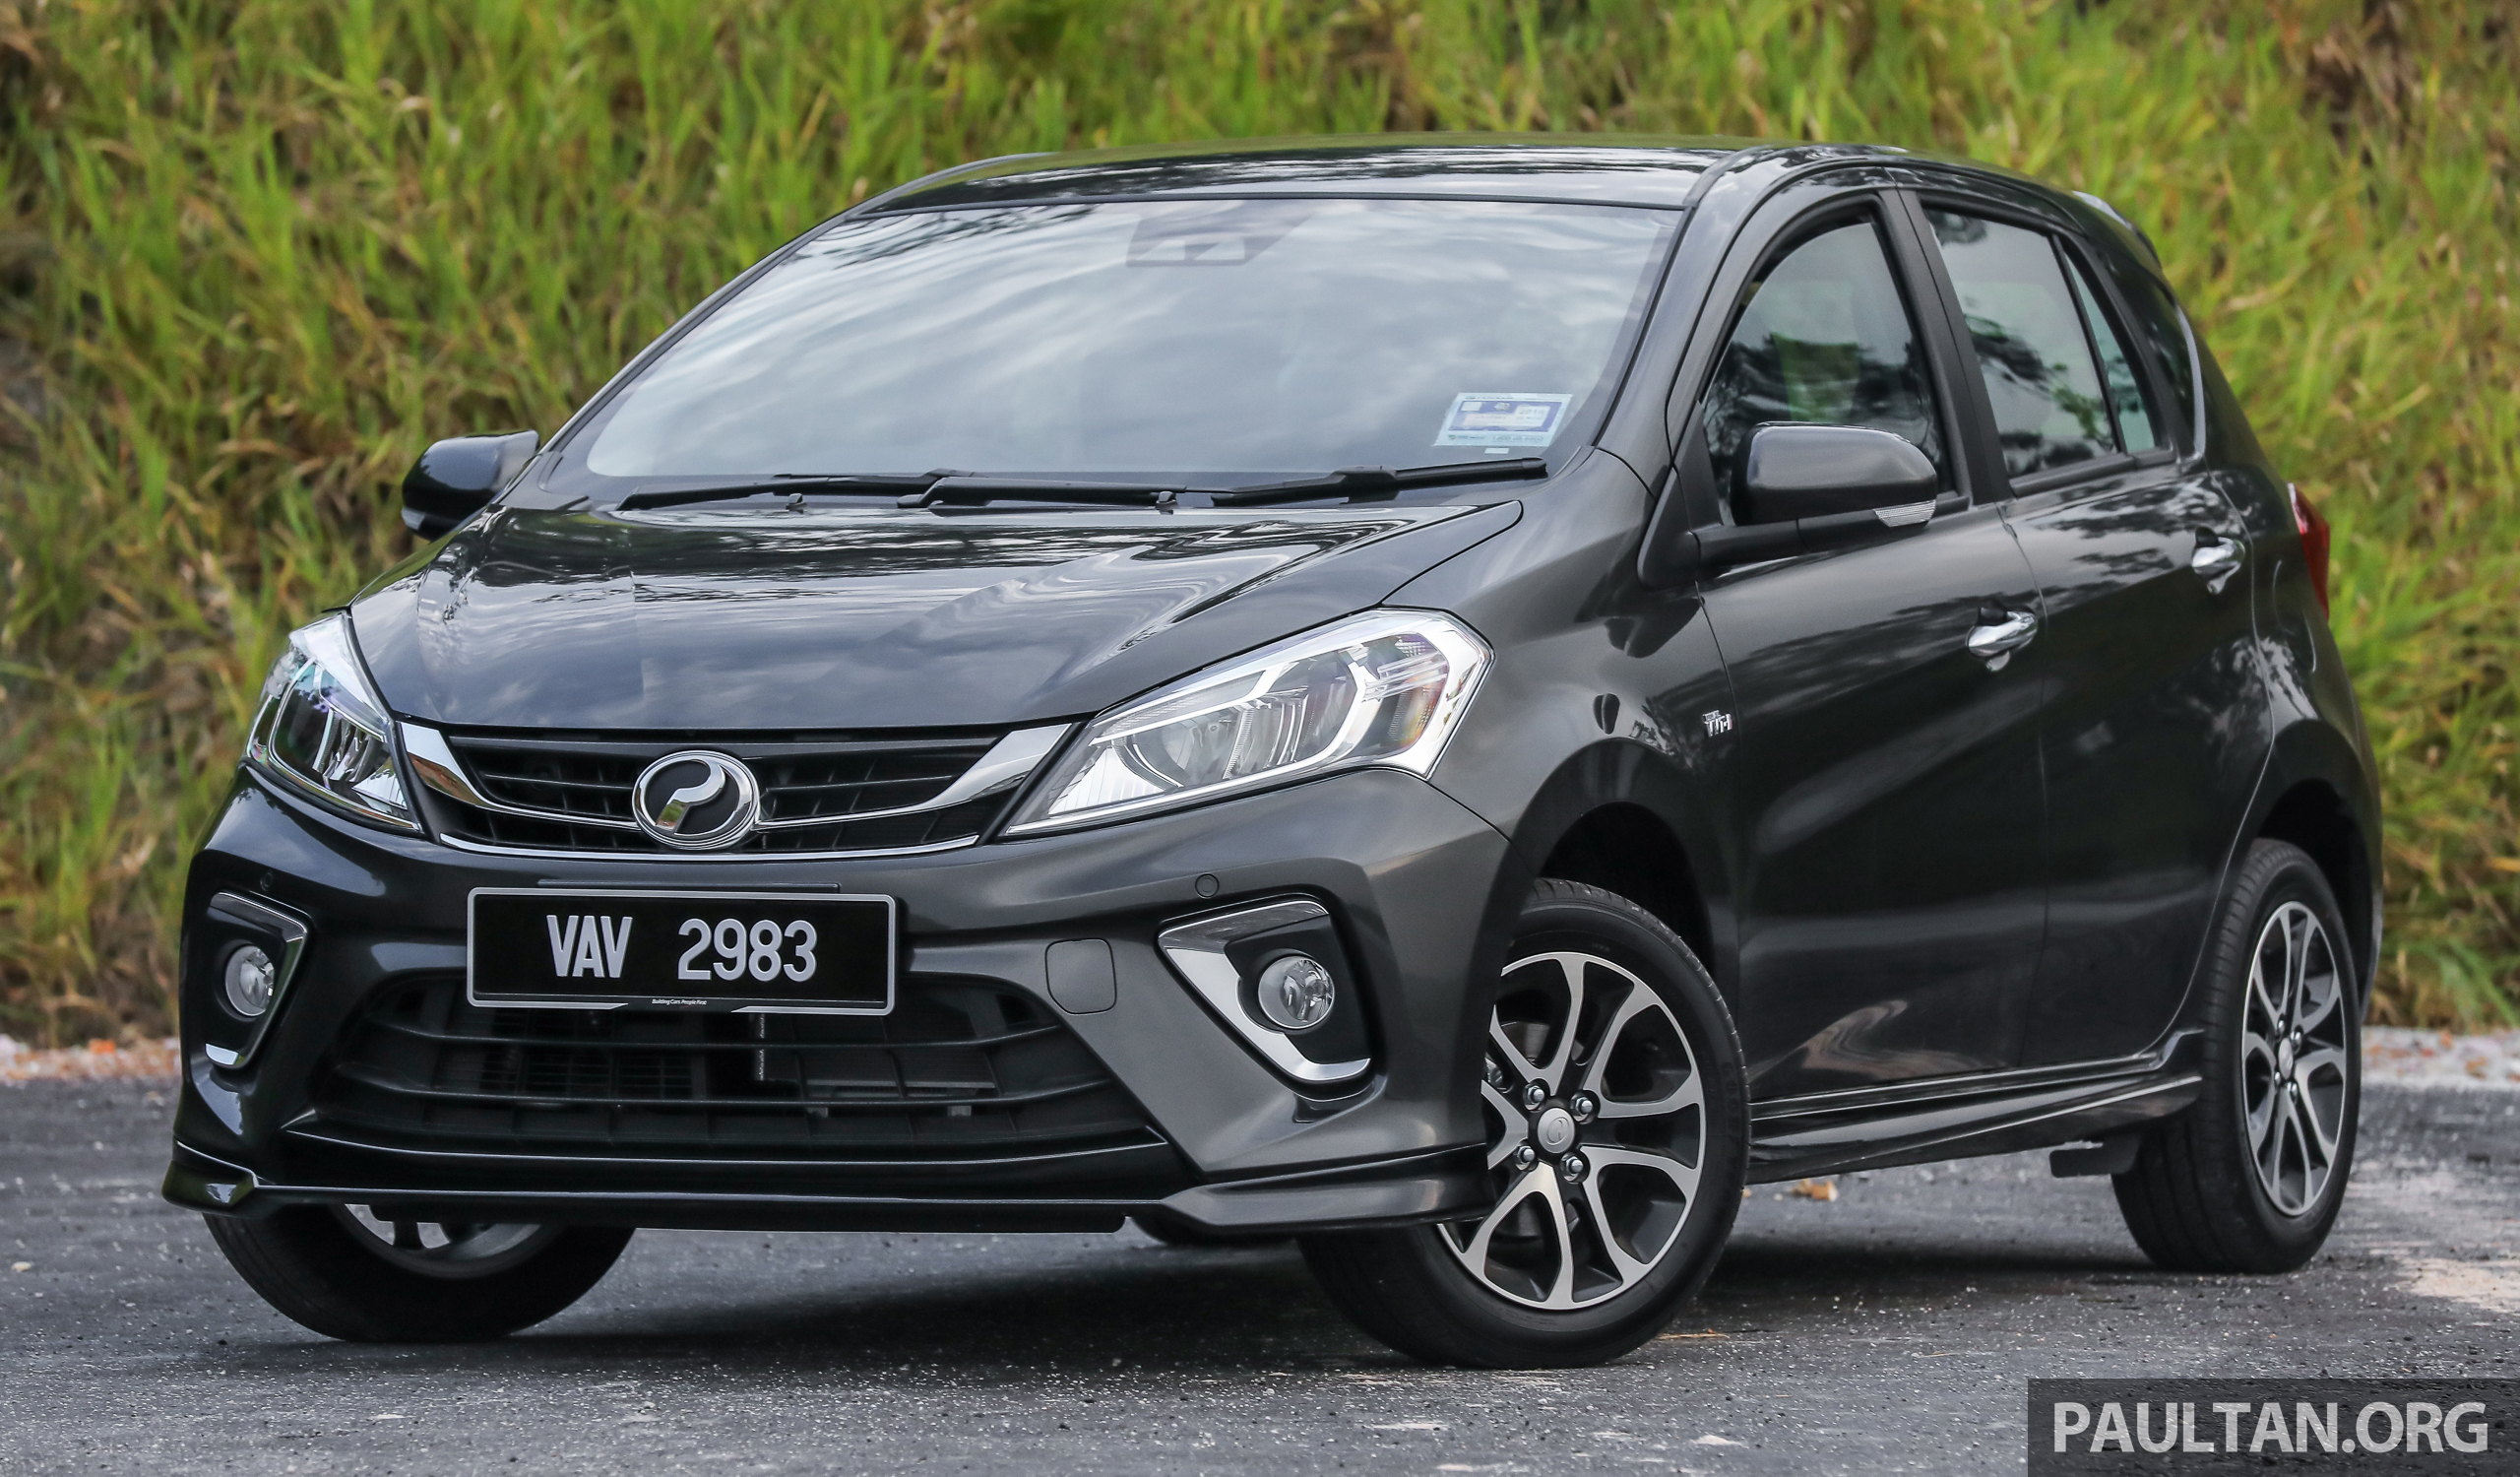 Perodua Myvi For Sale In Malaysia - Septi Kri